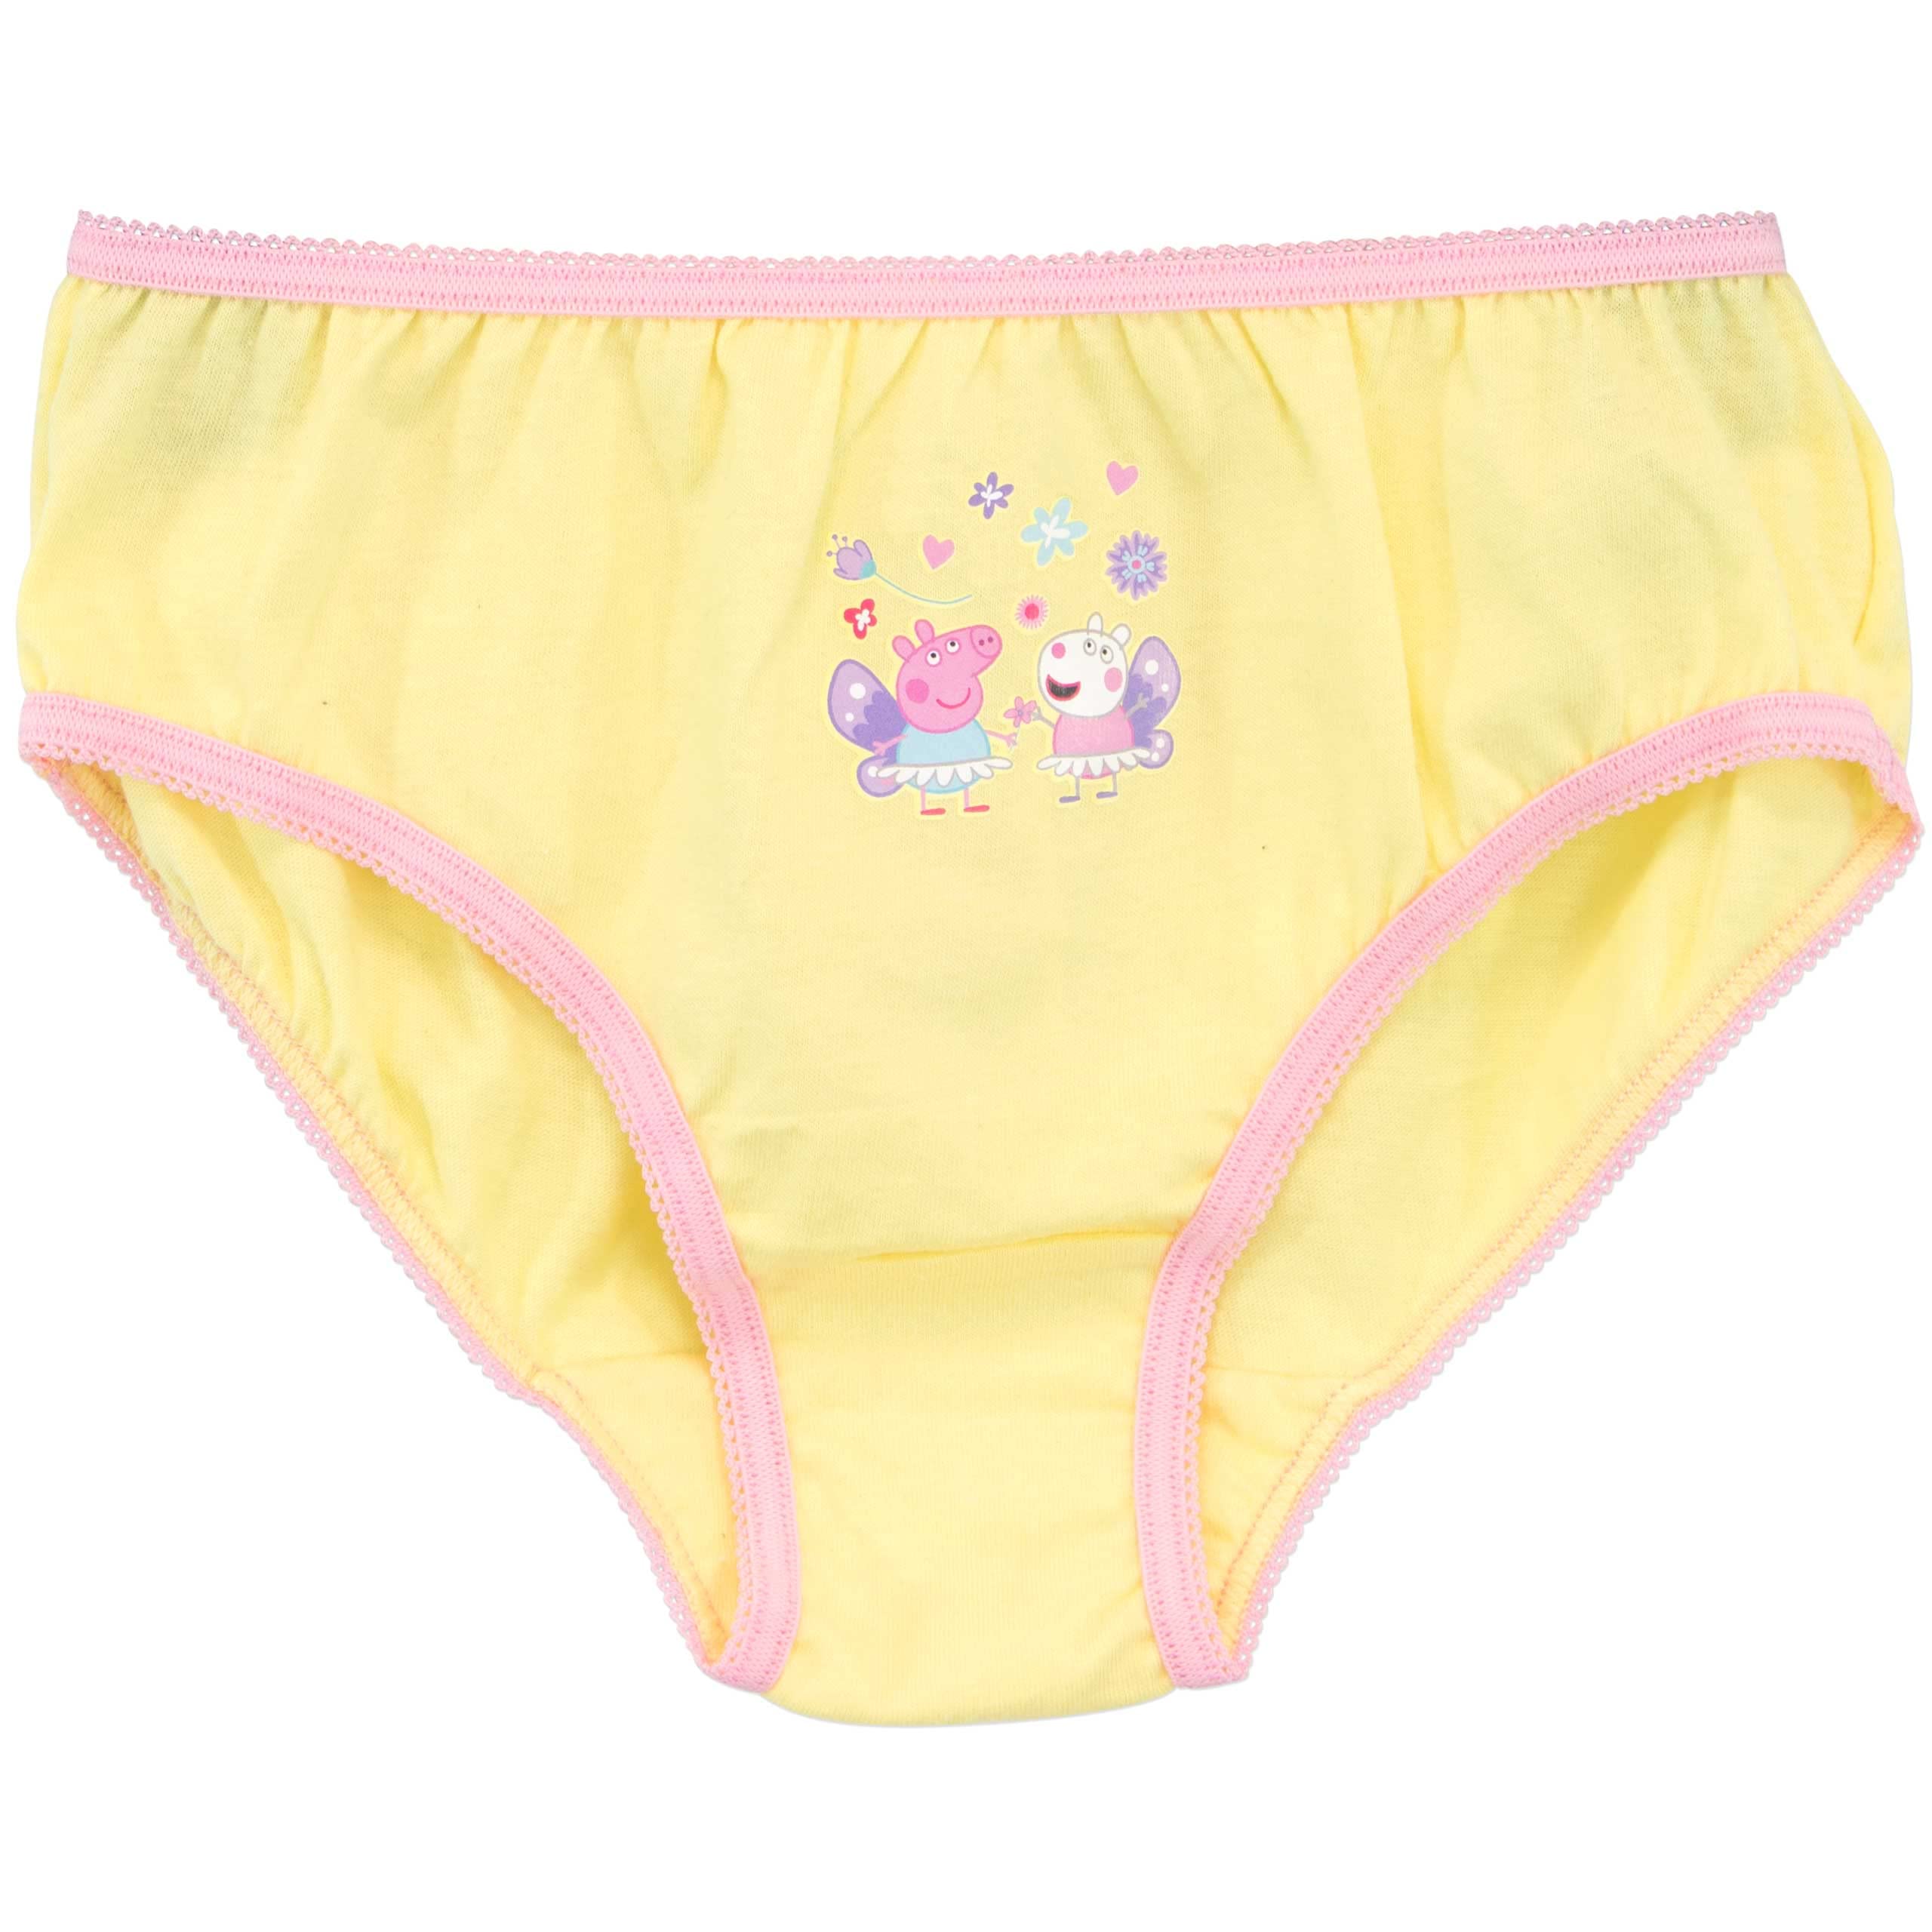 Peppa Pig Girls Underwear Pack of 5